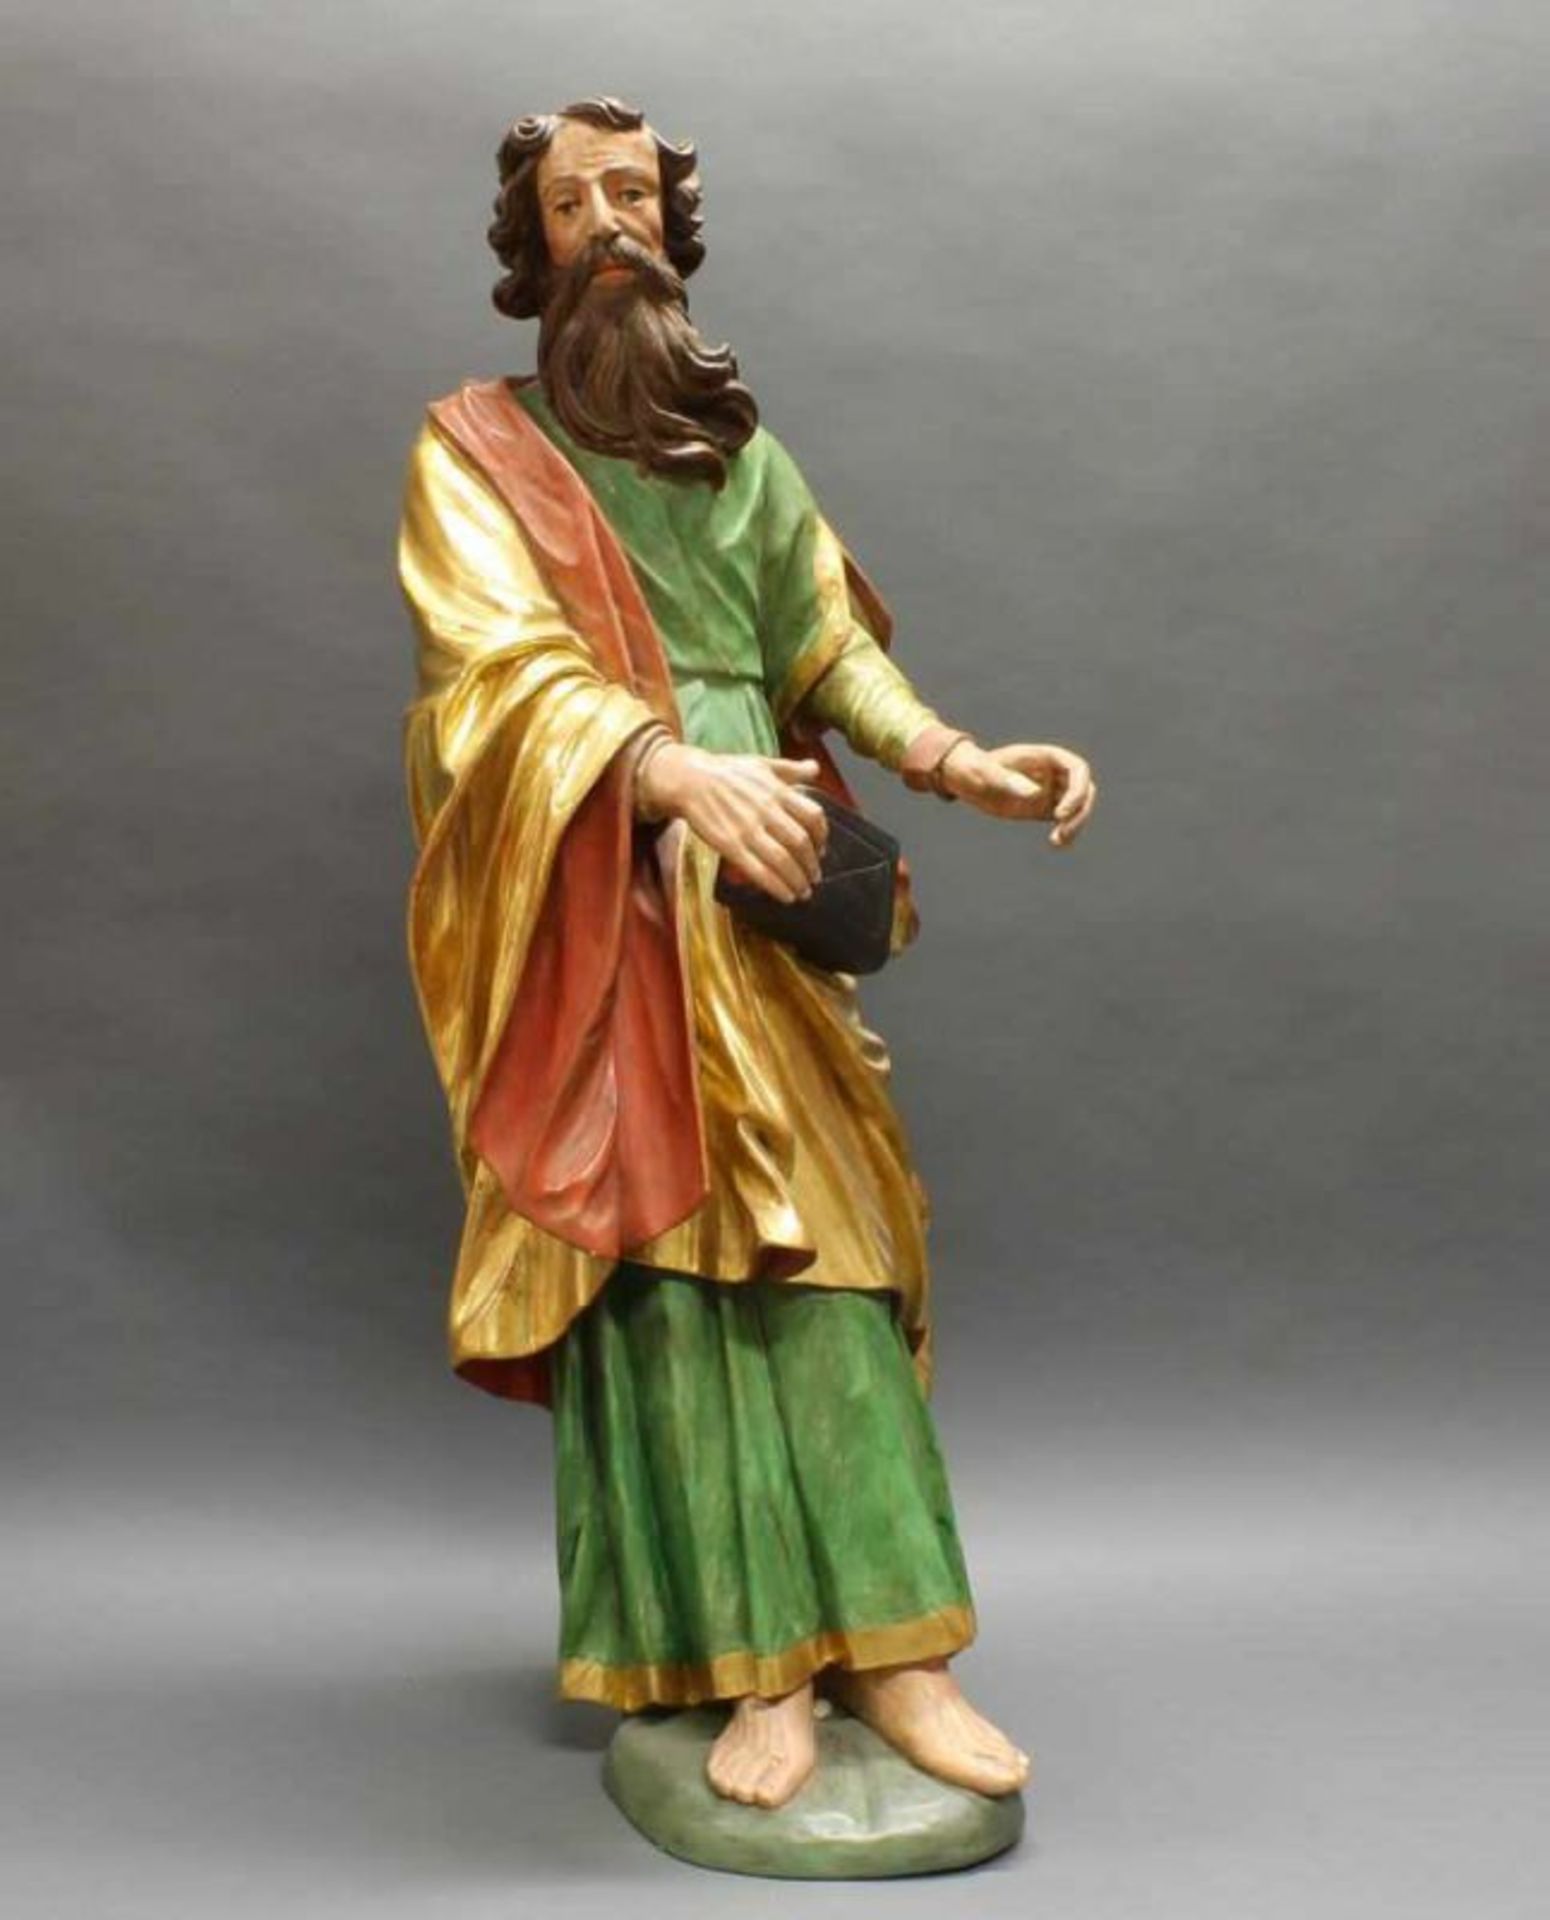 Skulptur, Holz geschnitzt, gefasst, "Apostel", 19. Jh., rückseitig abgeflacht, 111 cm hoch 20.00 %